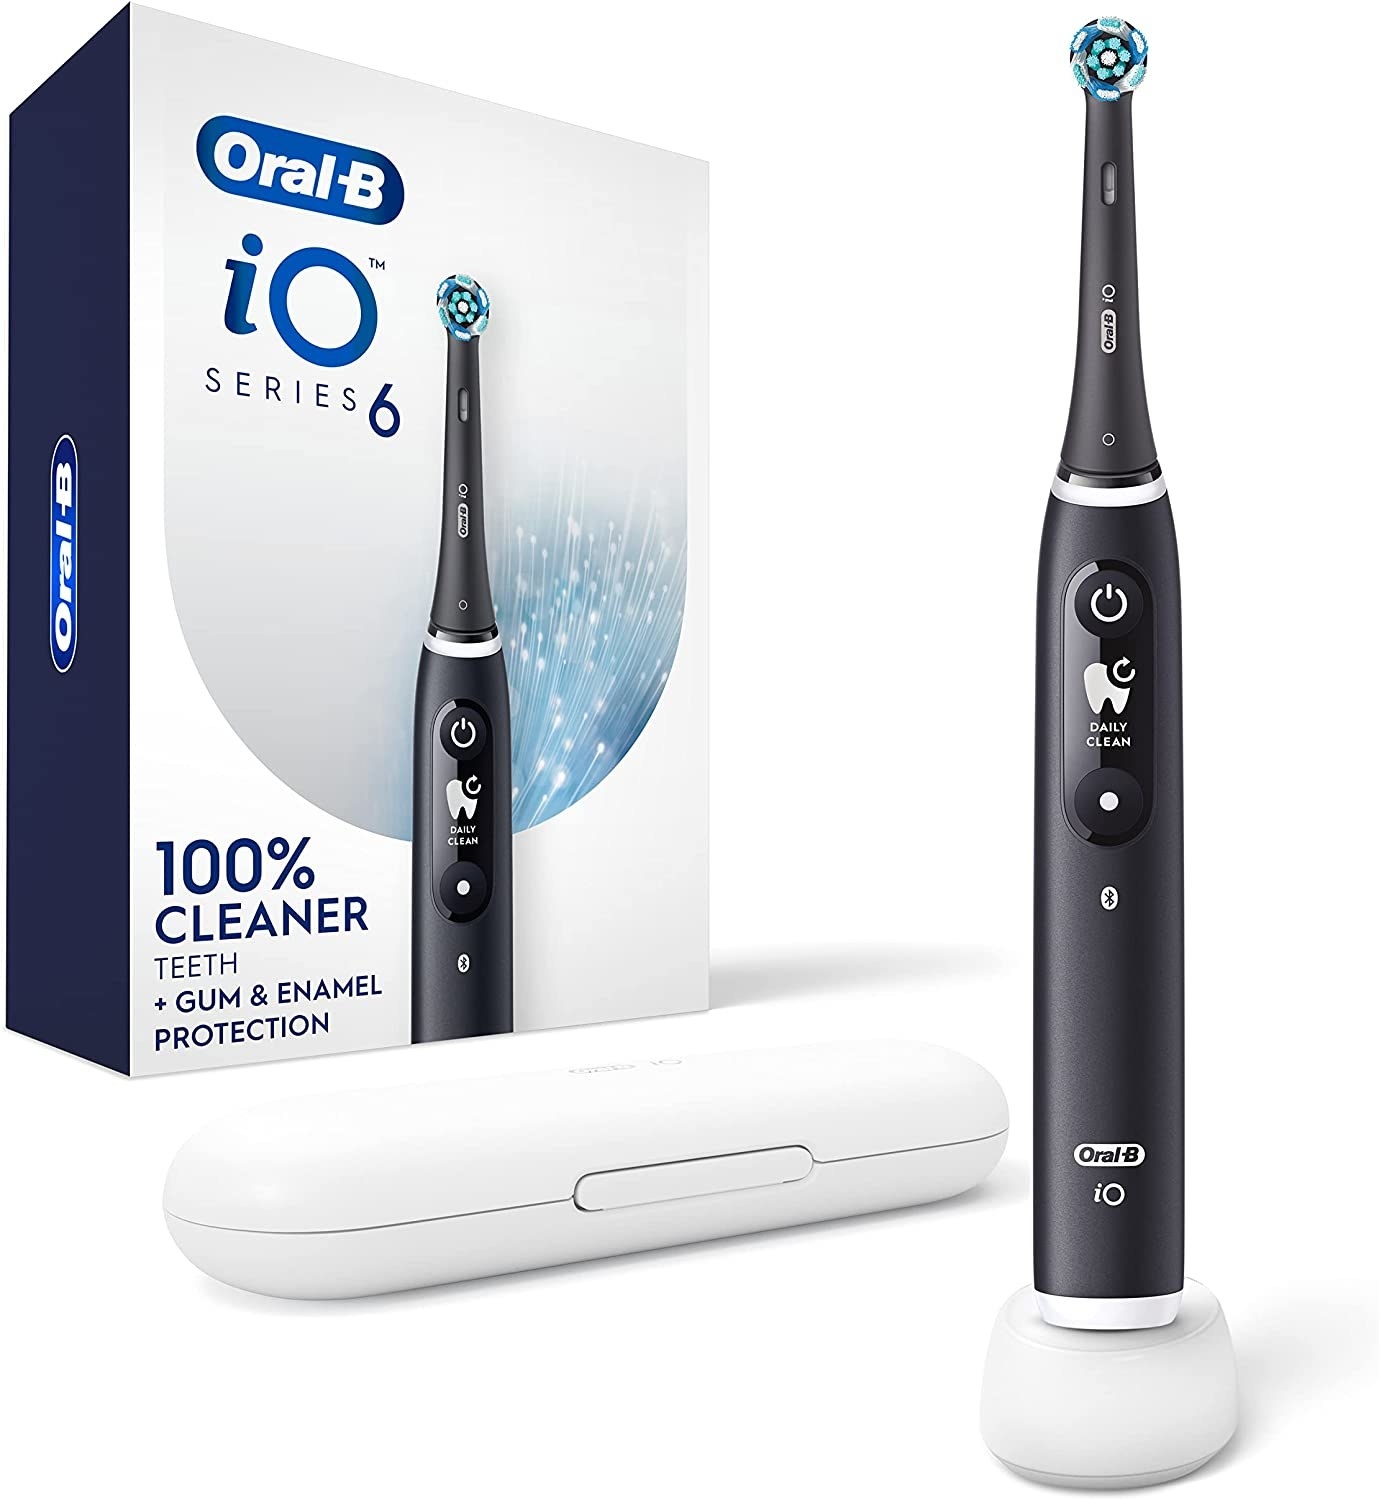 The iO6 toothbrush